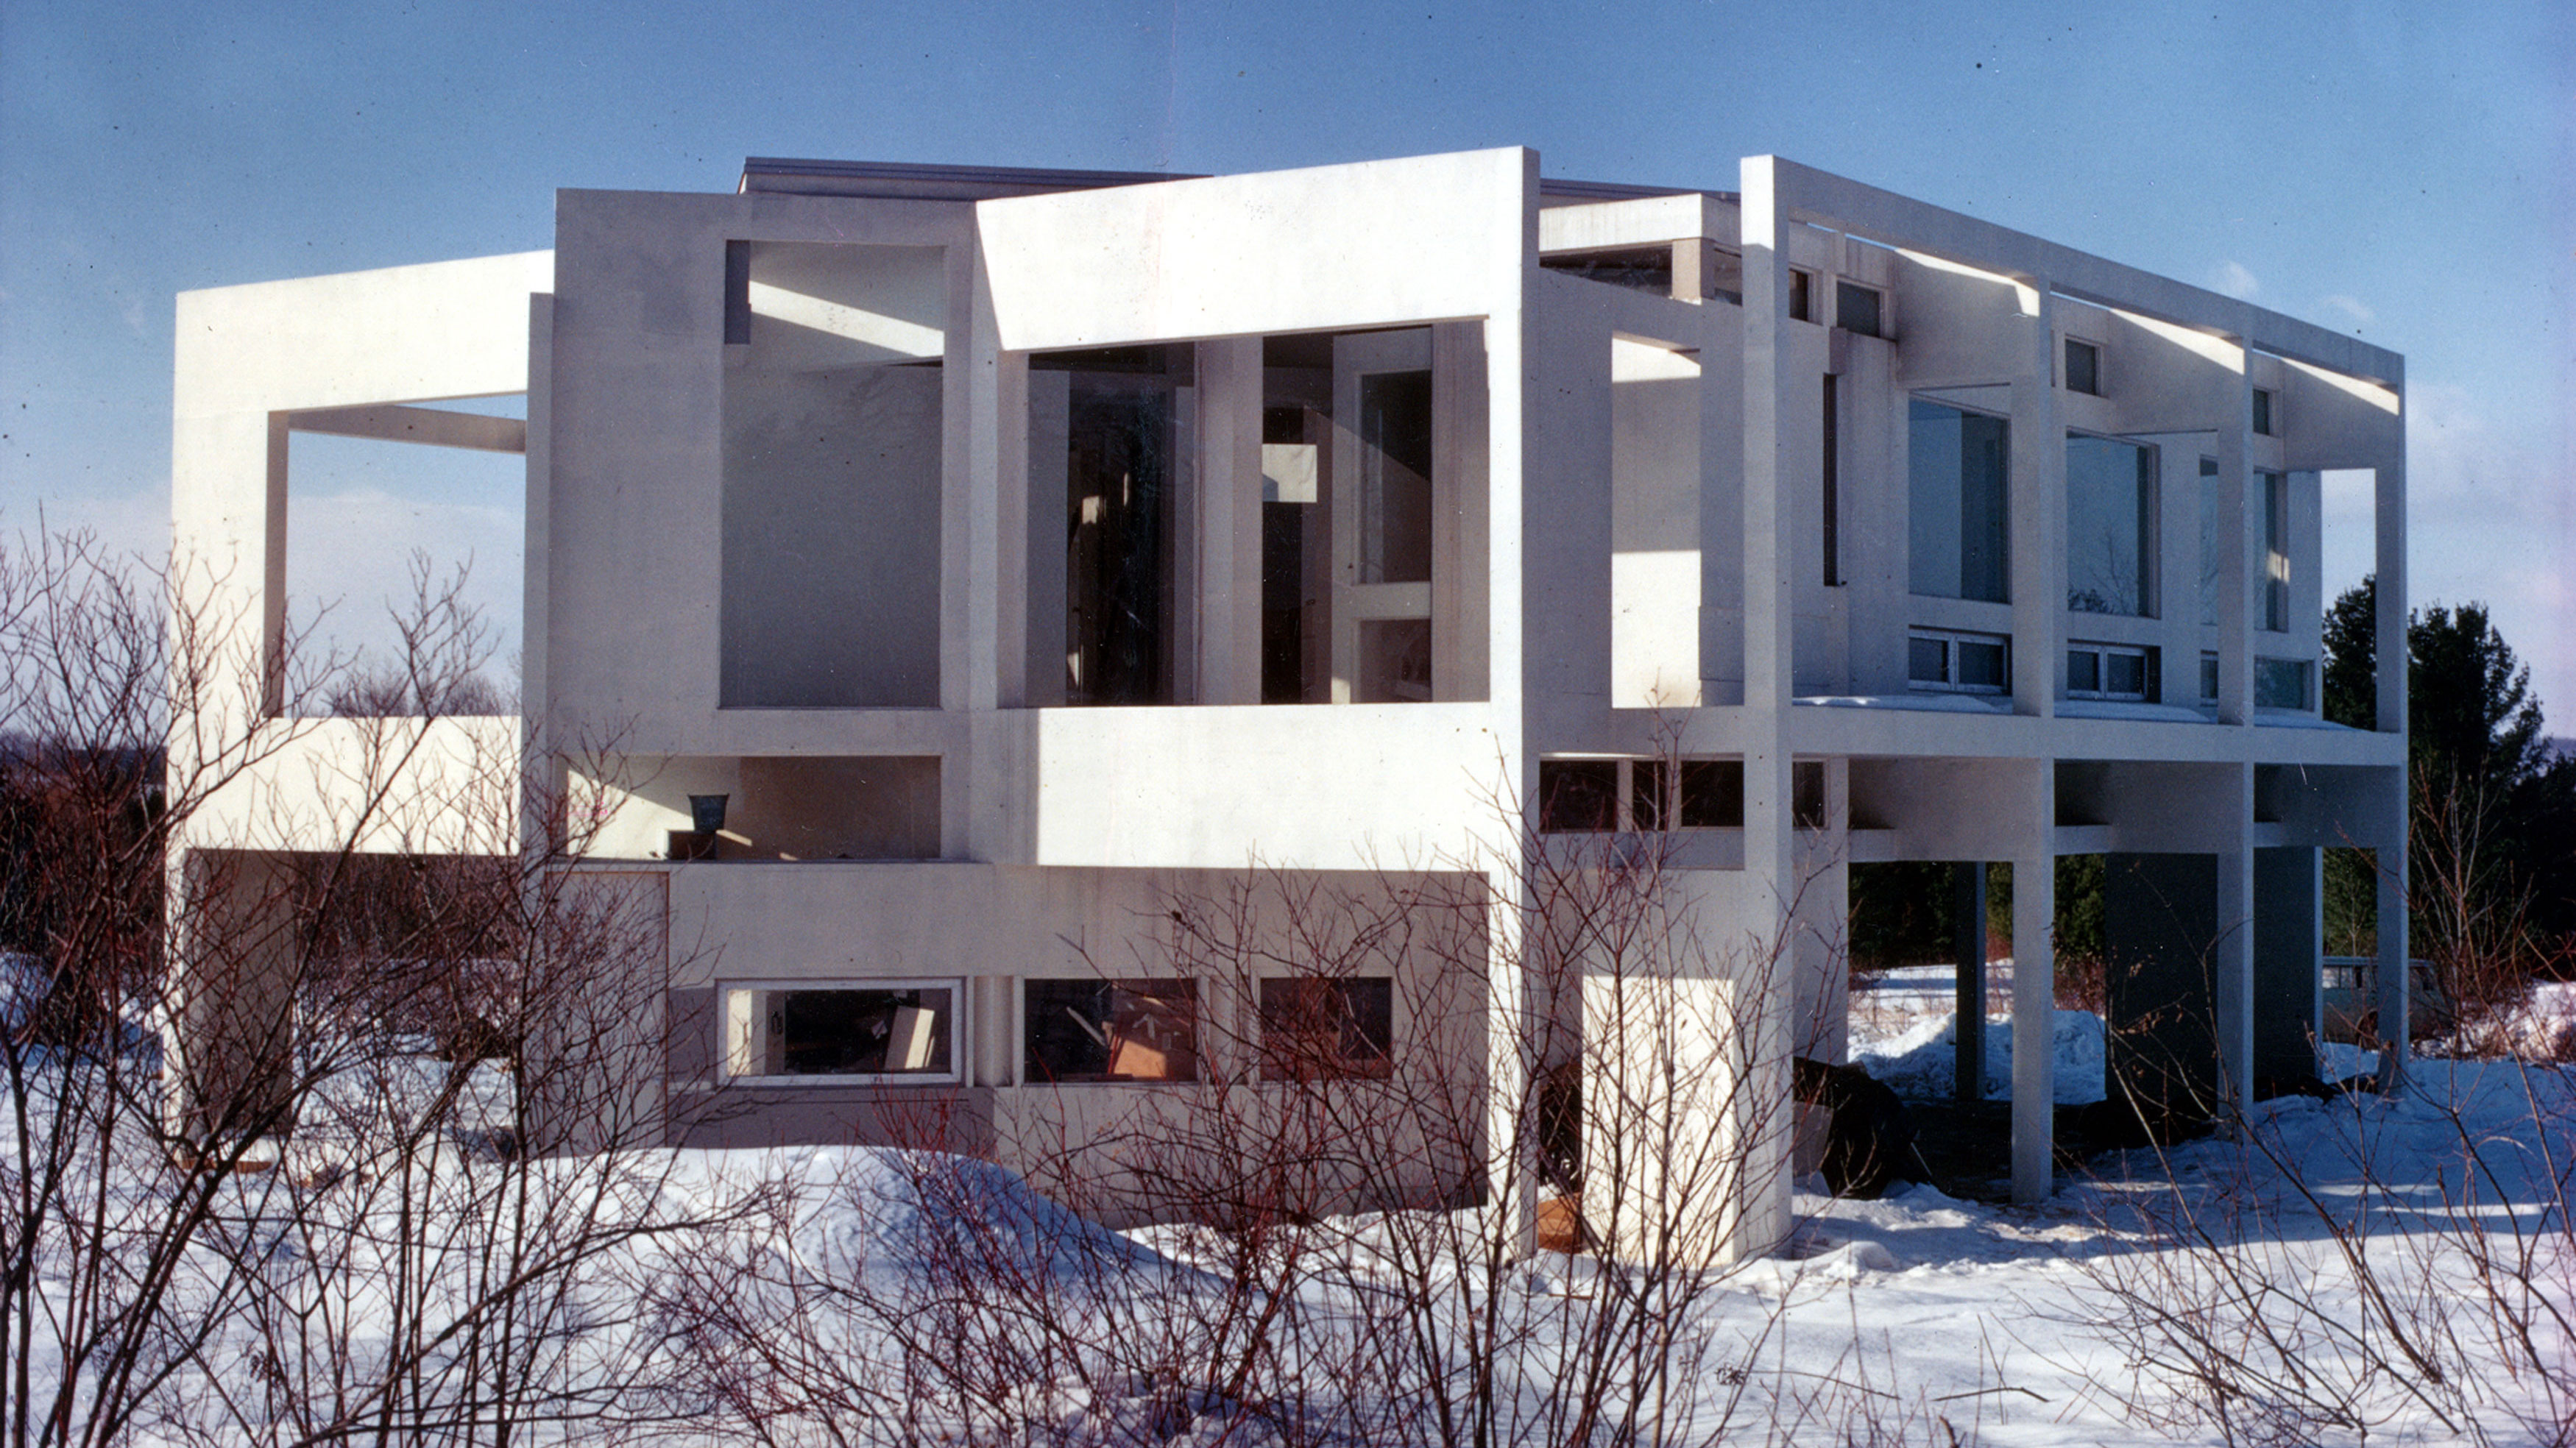 House III 1971 - EISENMAN ARCHITECTS